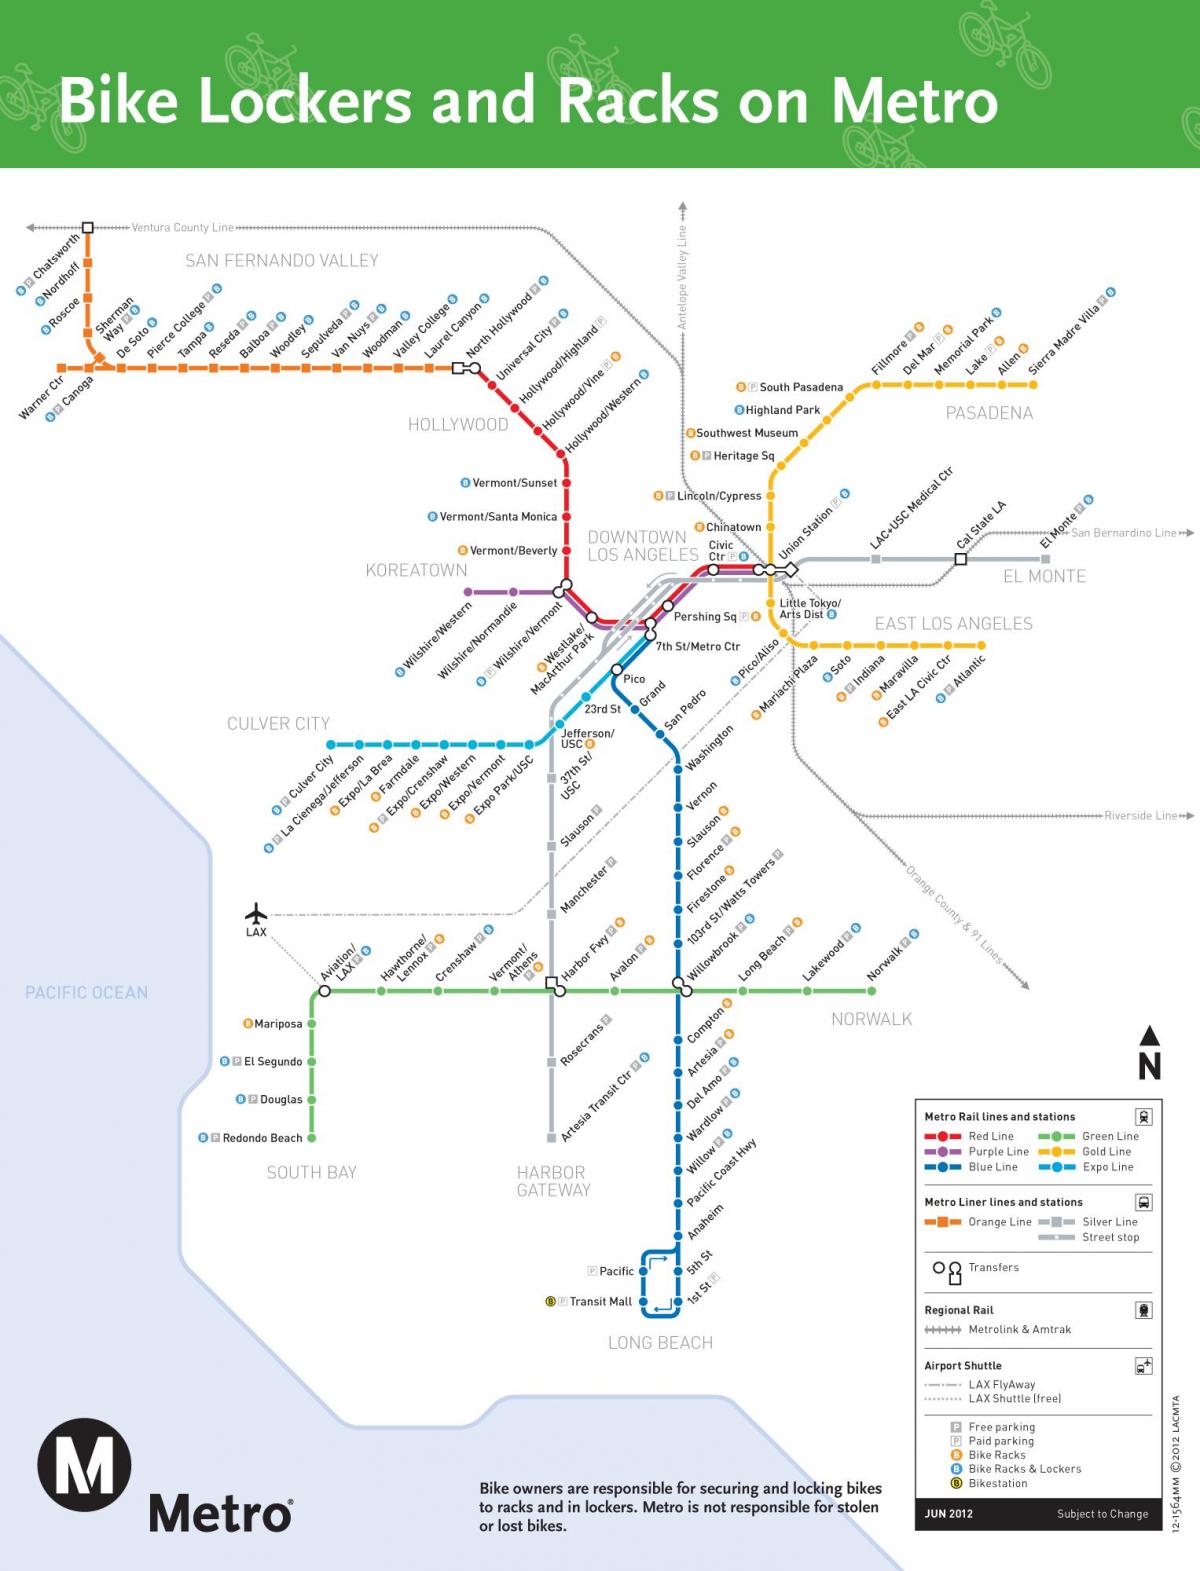 mappa di LA metropolitana moto